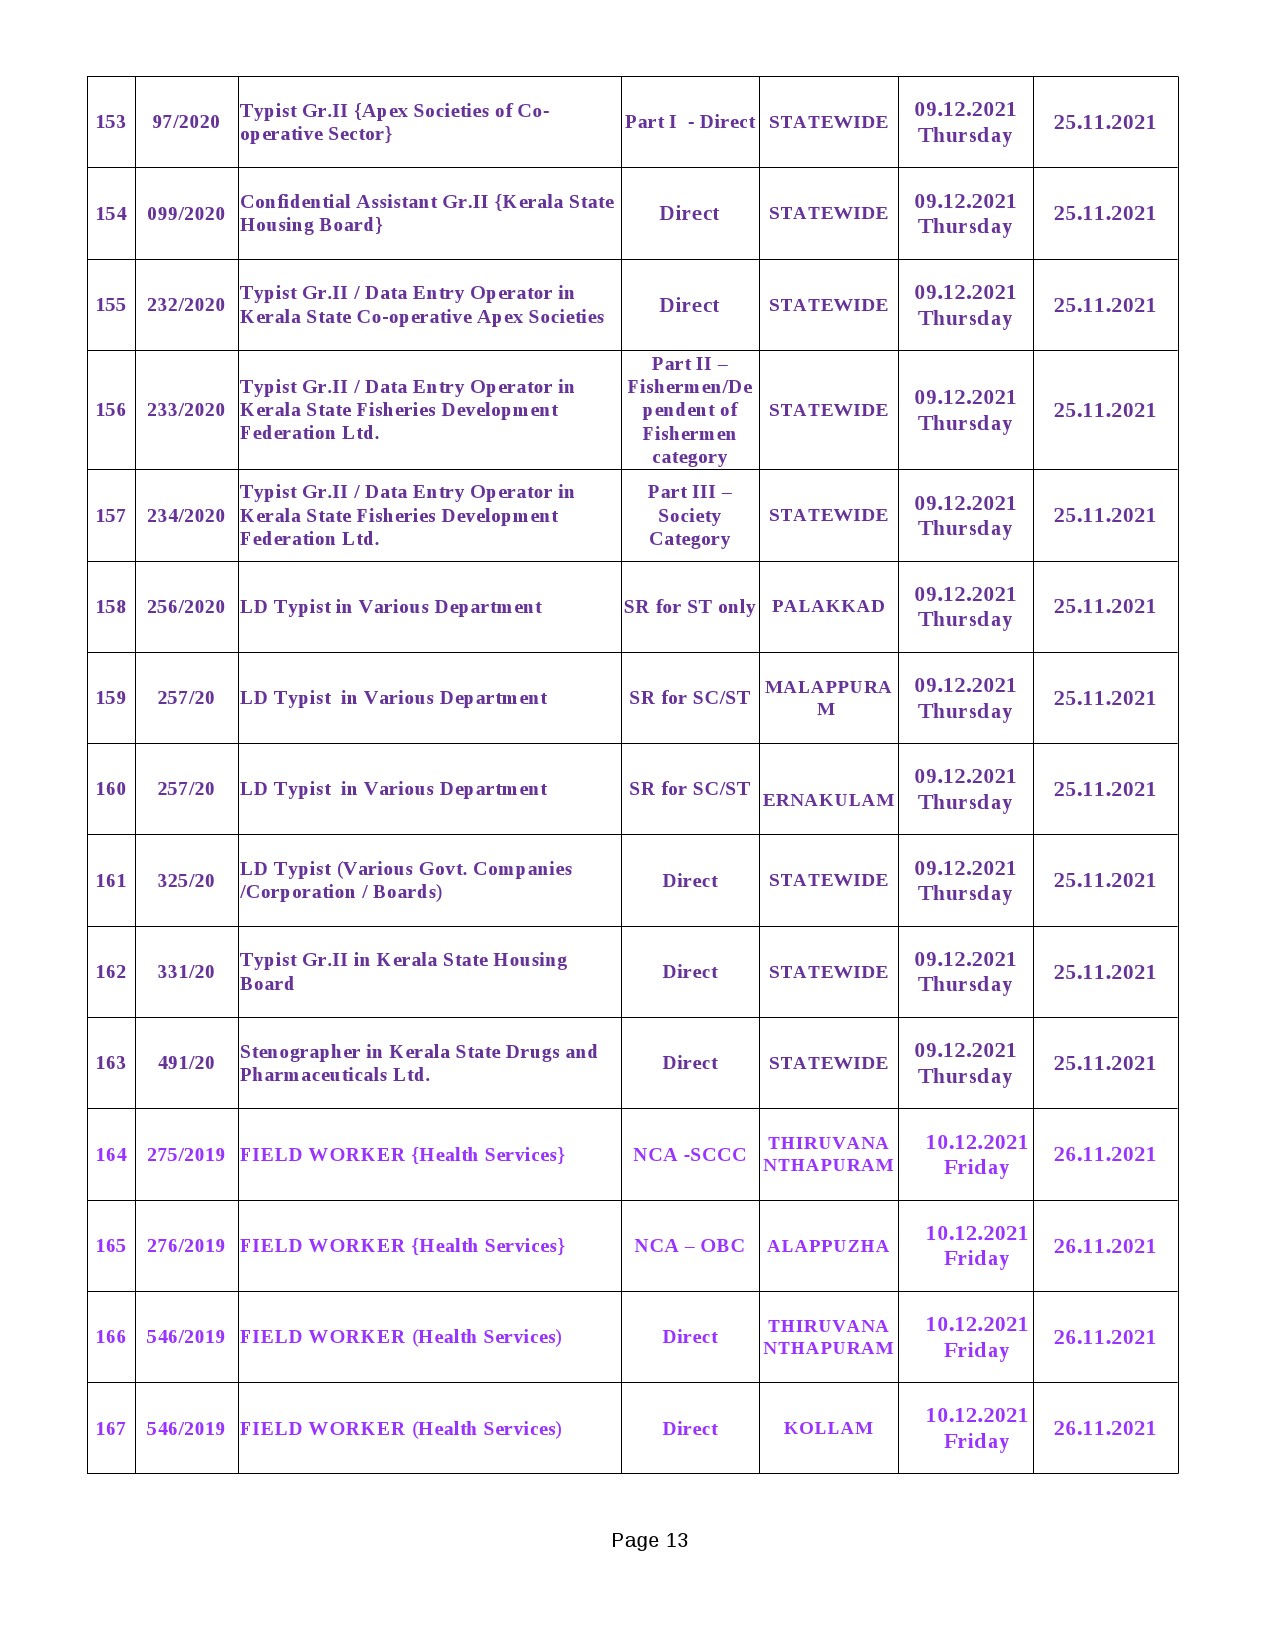 KPSC Programme For Main Examinations Of Upto SSLC Level Posts - Notification Image 13